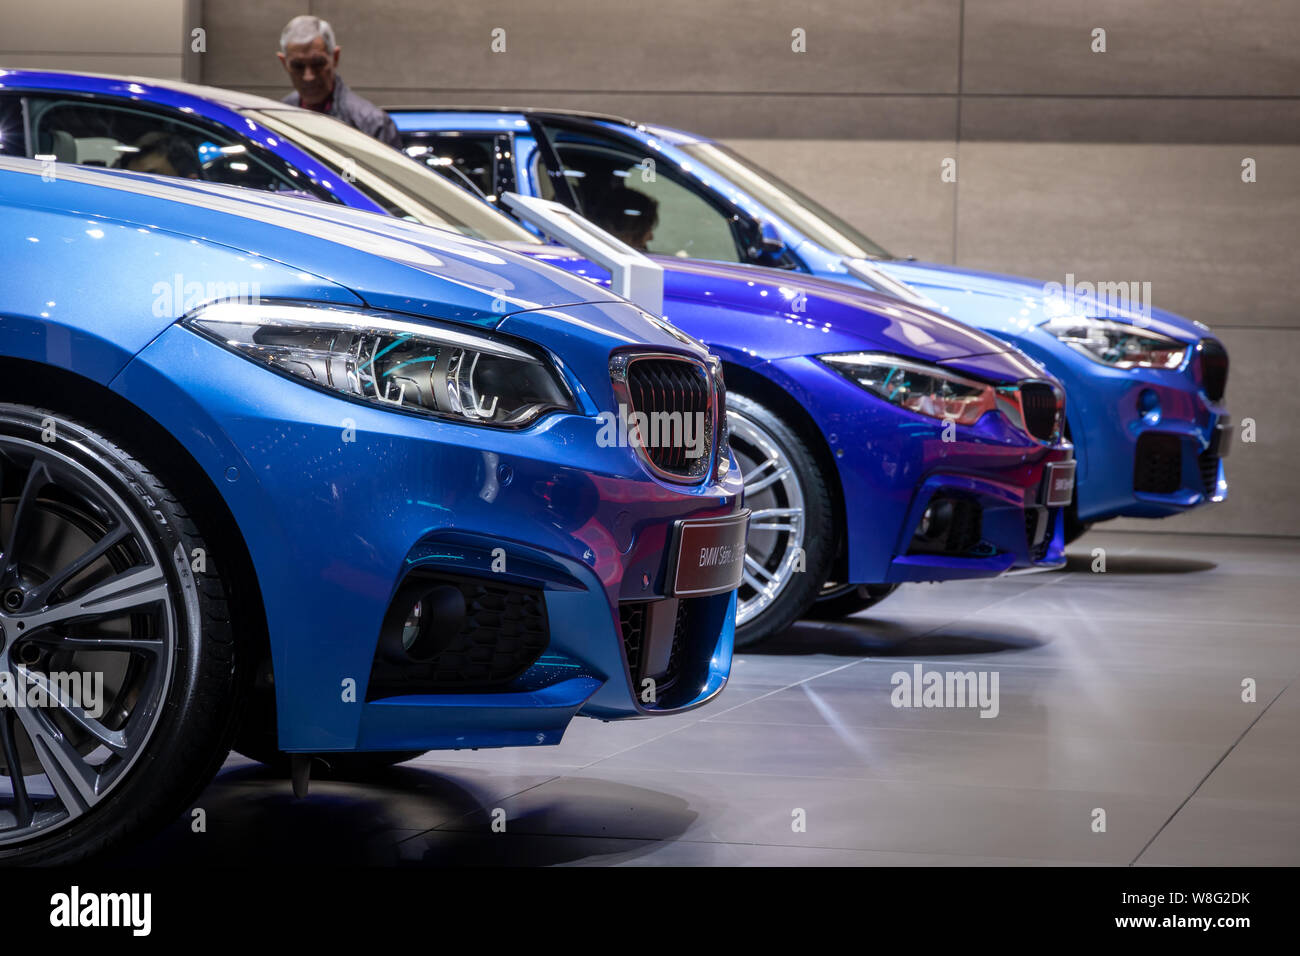 GENEVA, SWITZERLAND - MARCH 6, 2019: Row of new BMW cars showcased at the 89th Geneva International Motor Show. Stock Photo